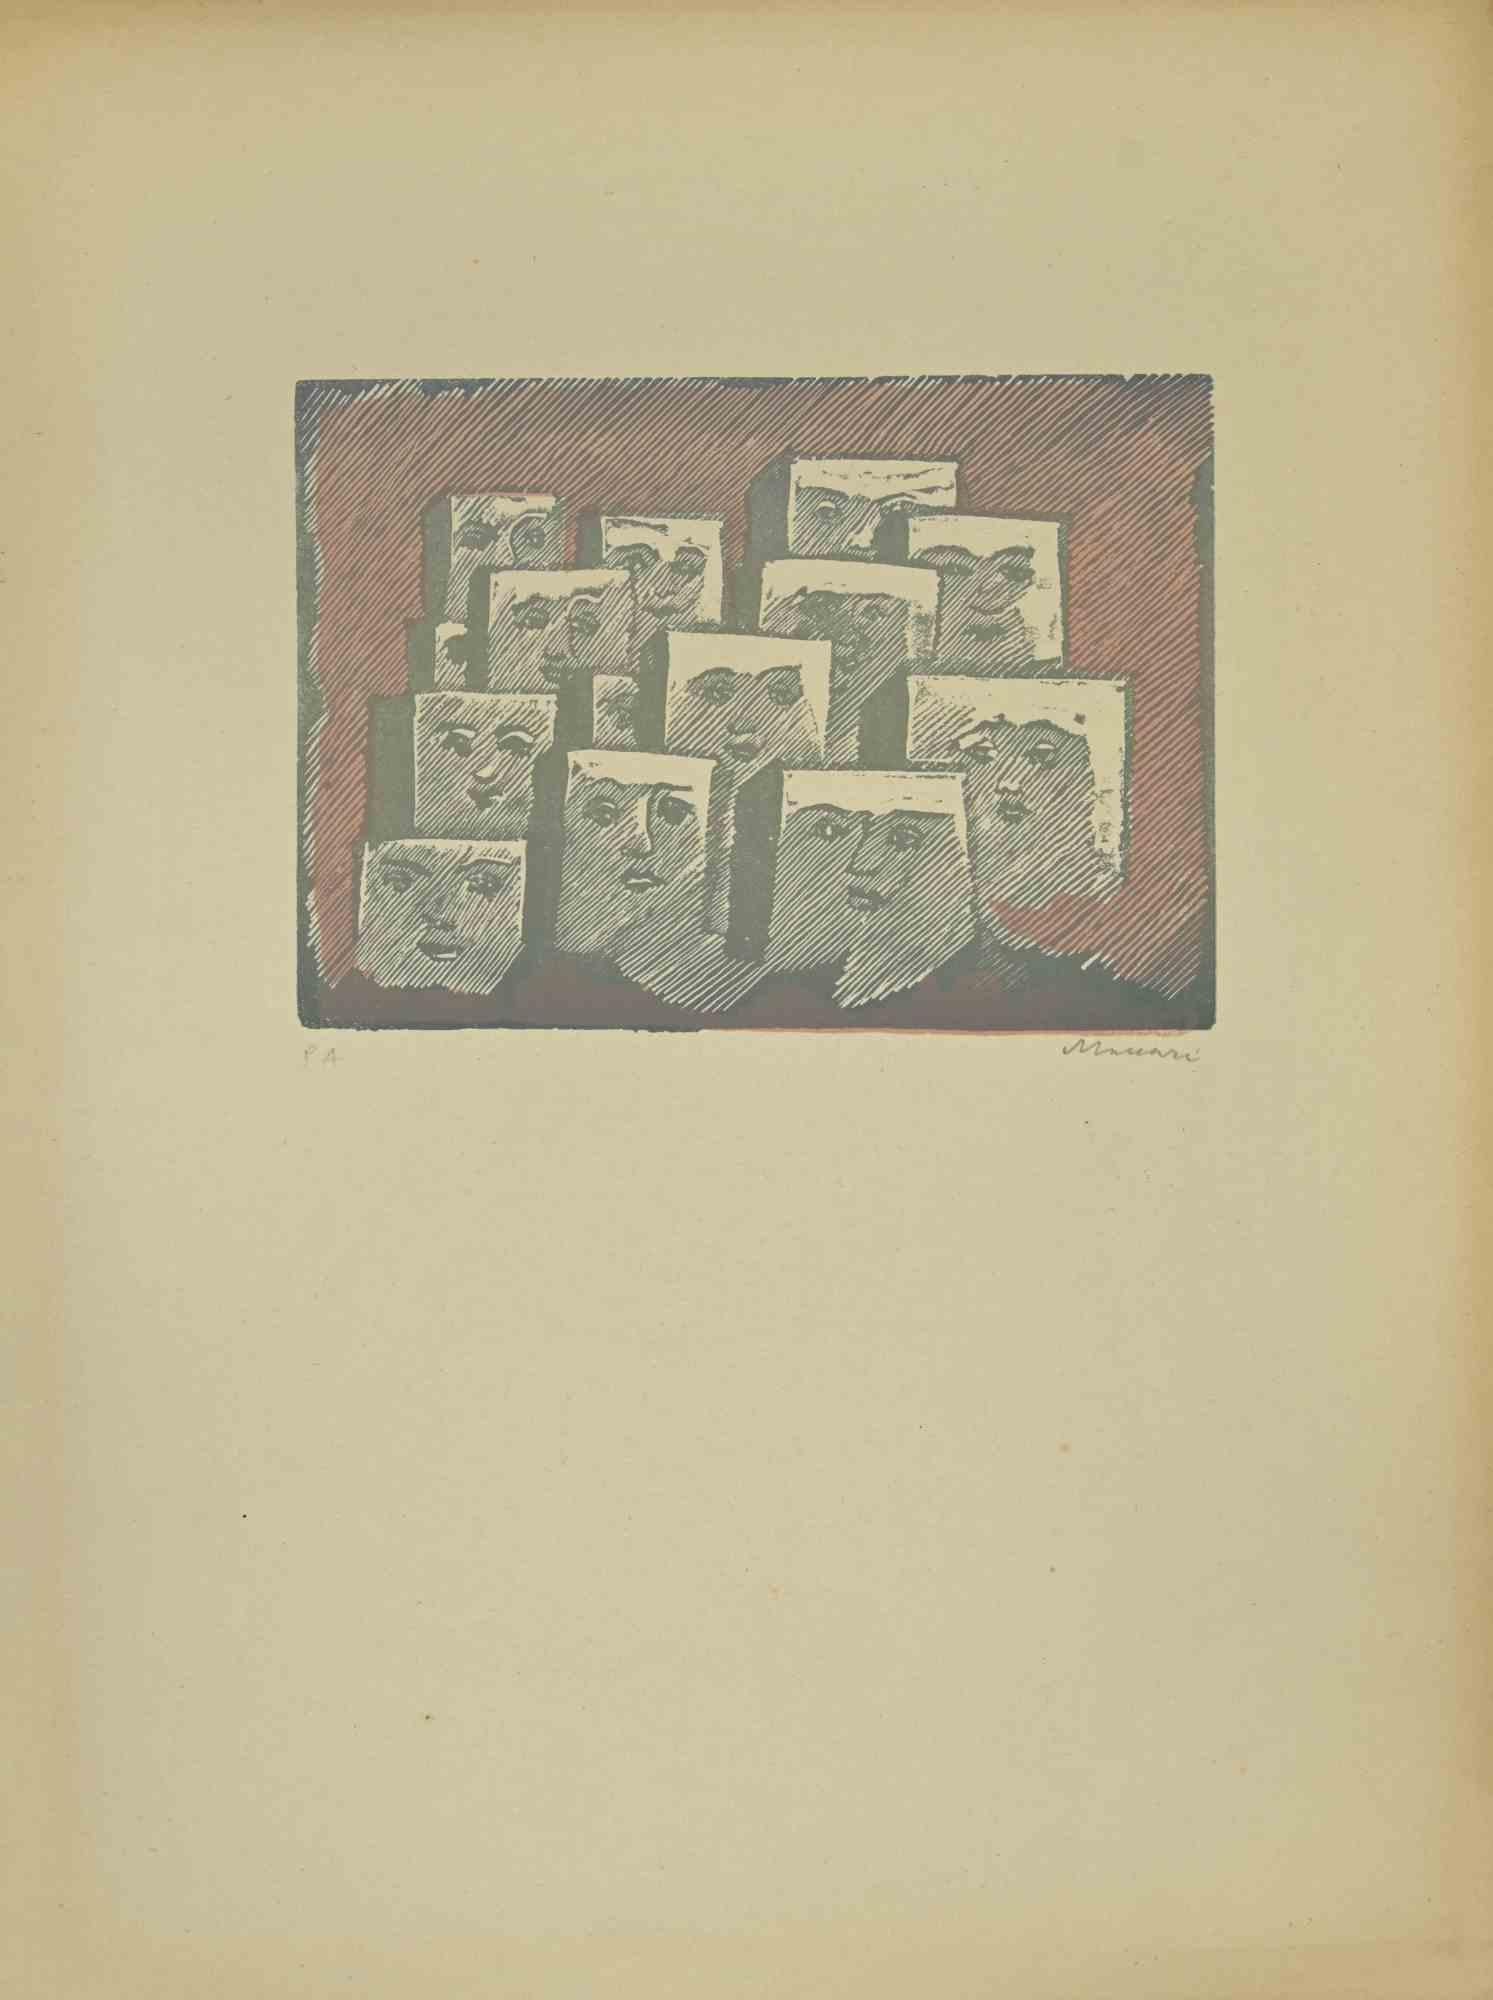 Faces - Linocut Print by Mino Maccari - 1940s